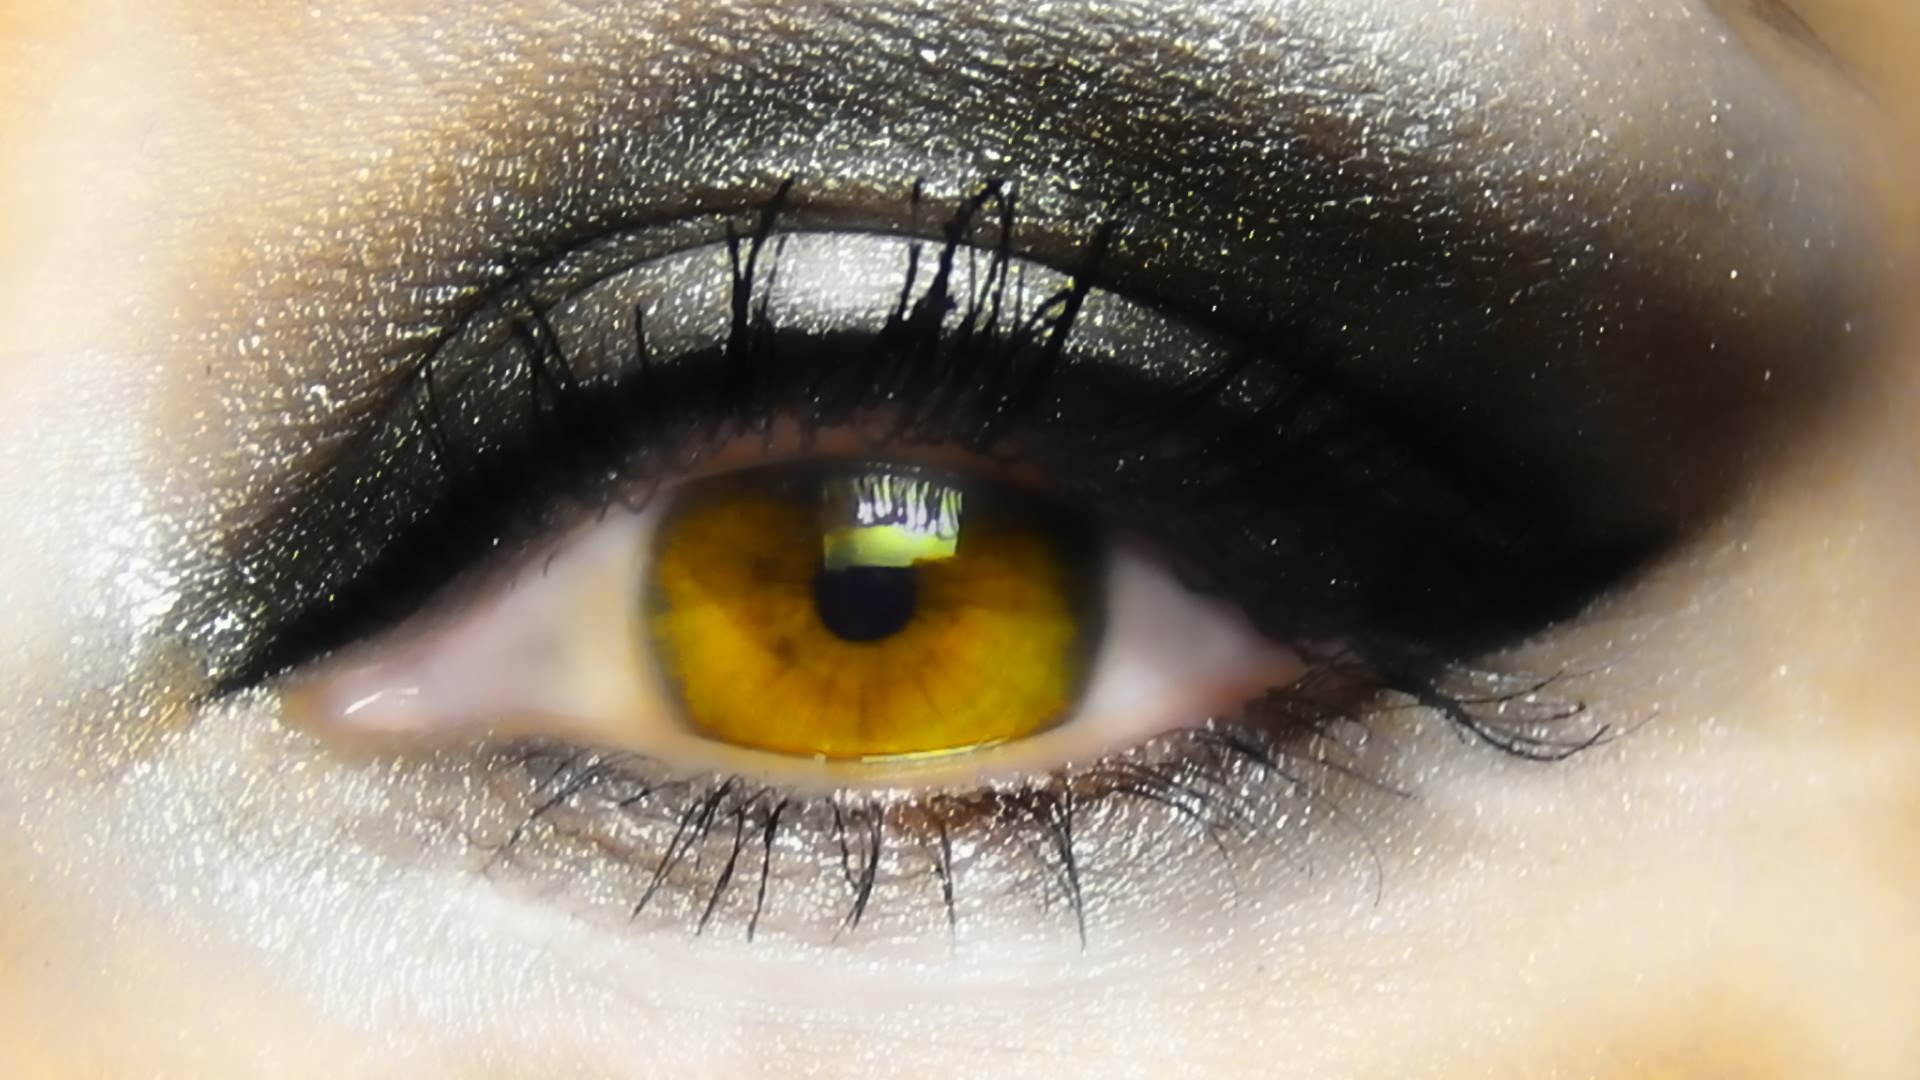 Eye-catching close-up of vibrant women's eye in stunning detail.